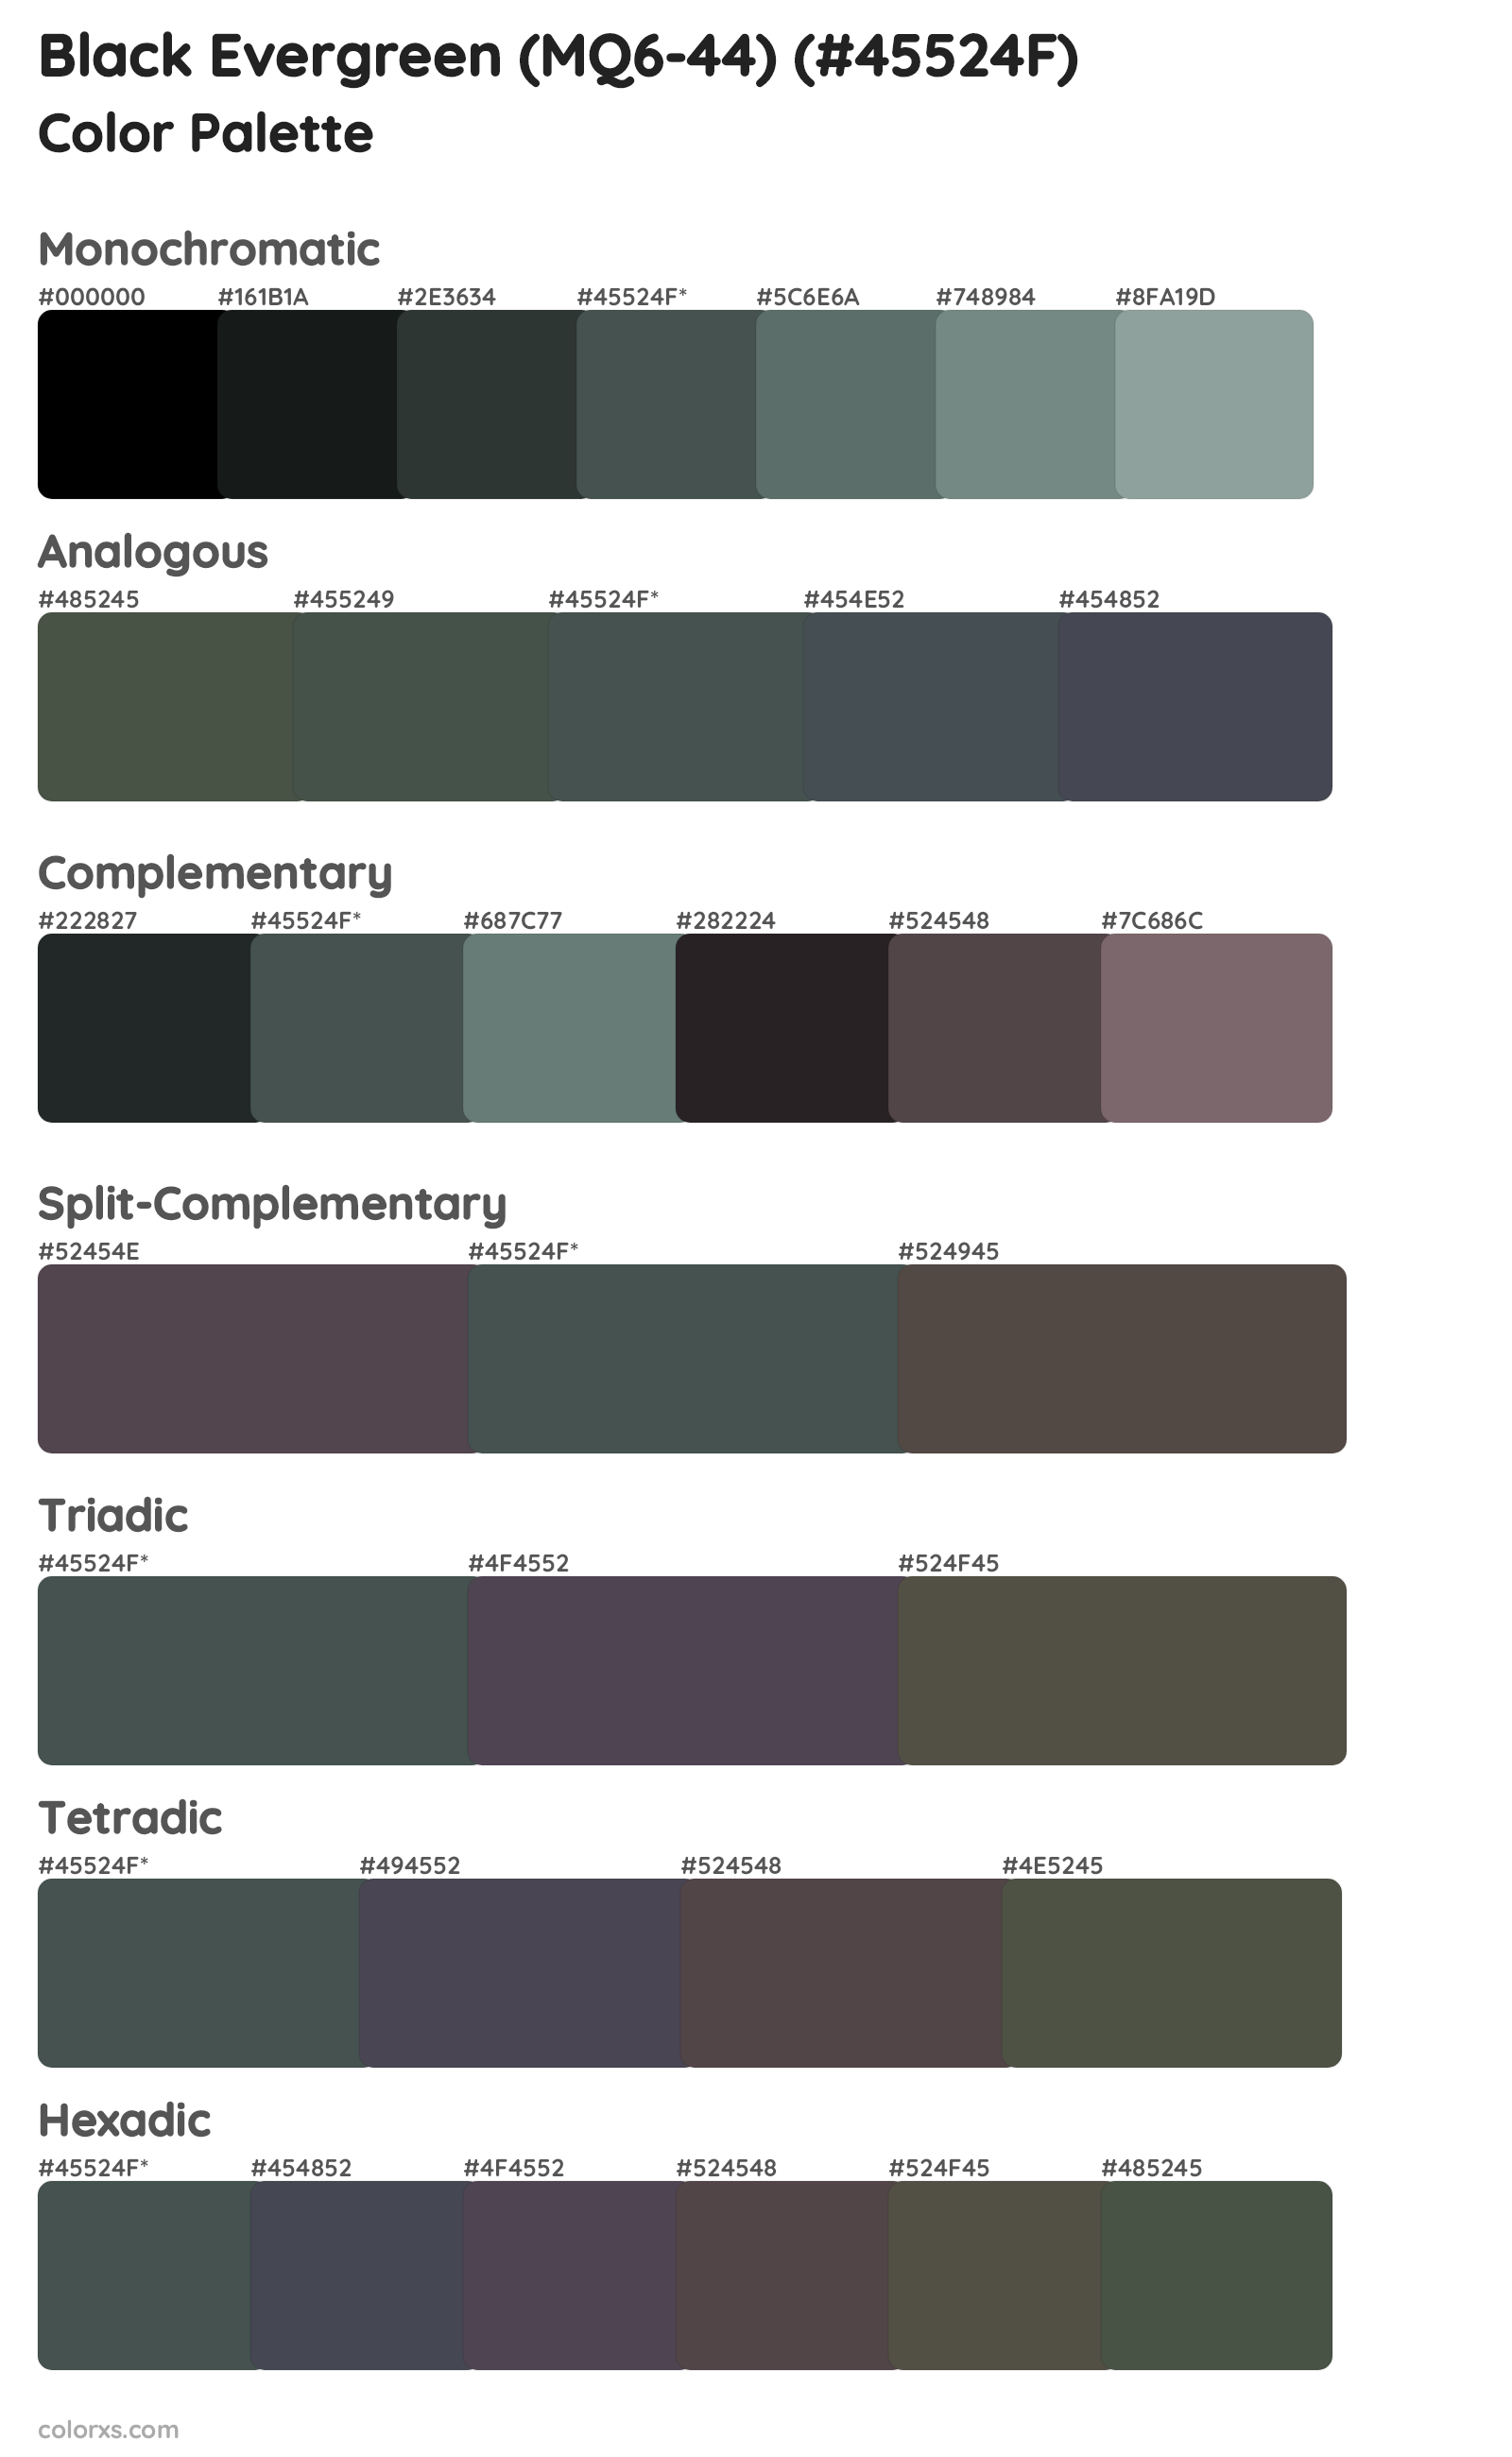 Black Evergreen (MQ6-44) Color Scheme Palettes